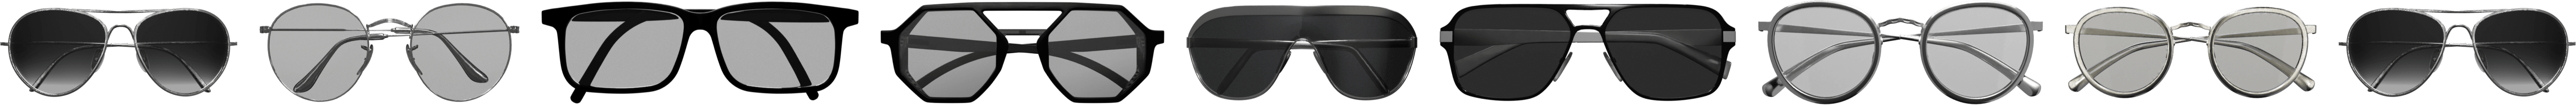 Eyeshaker: Pulizia occhiali semplice ed innovativa - Luziottica Vision